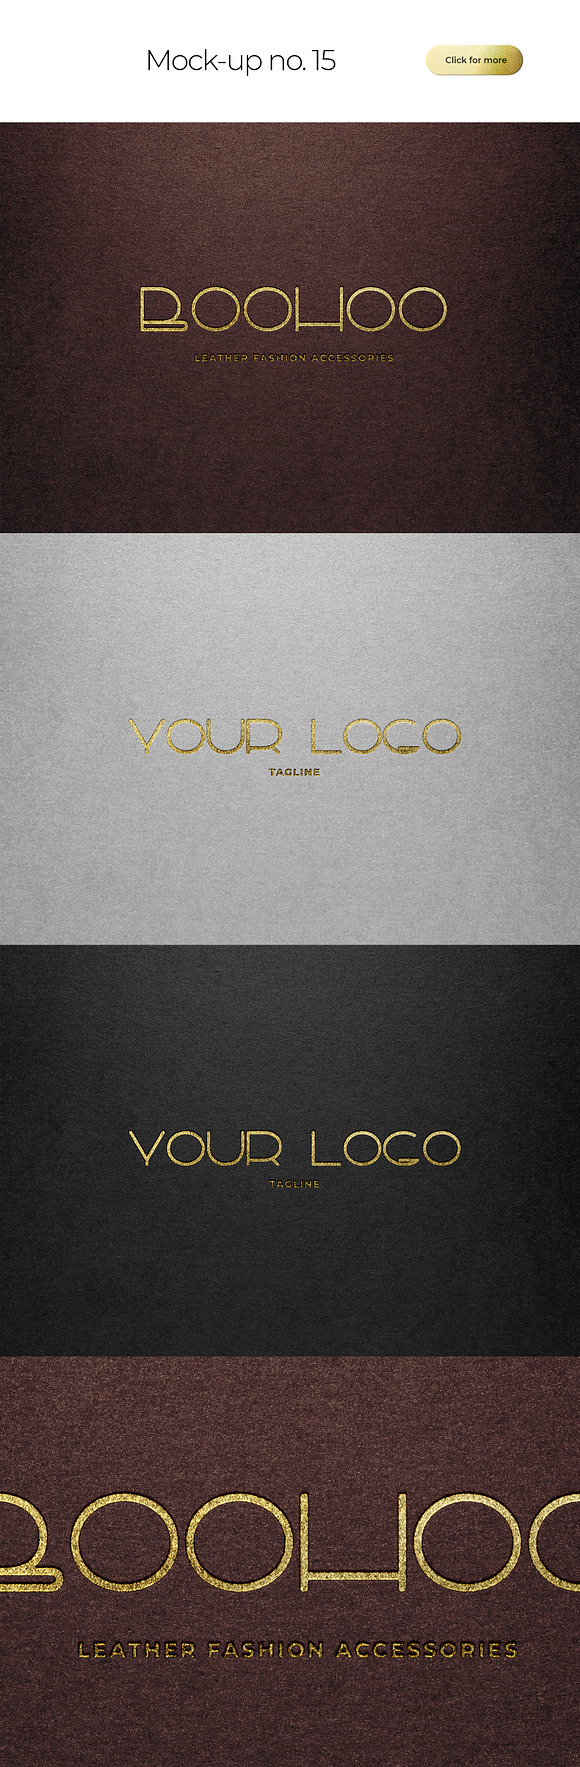 50 logo mockup branding bundle in Branding Mockups - product preview 16